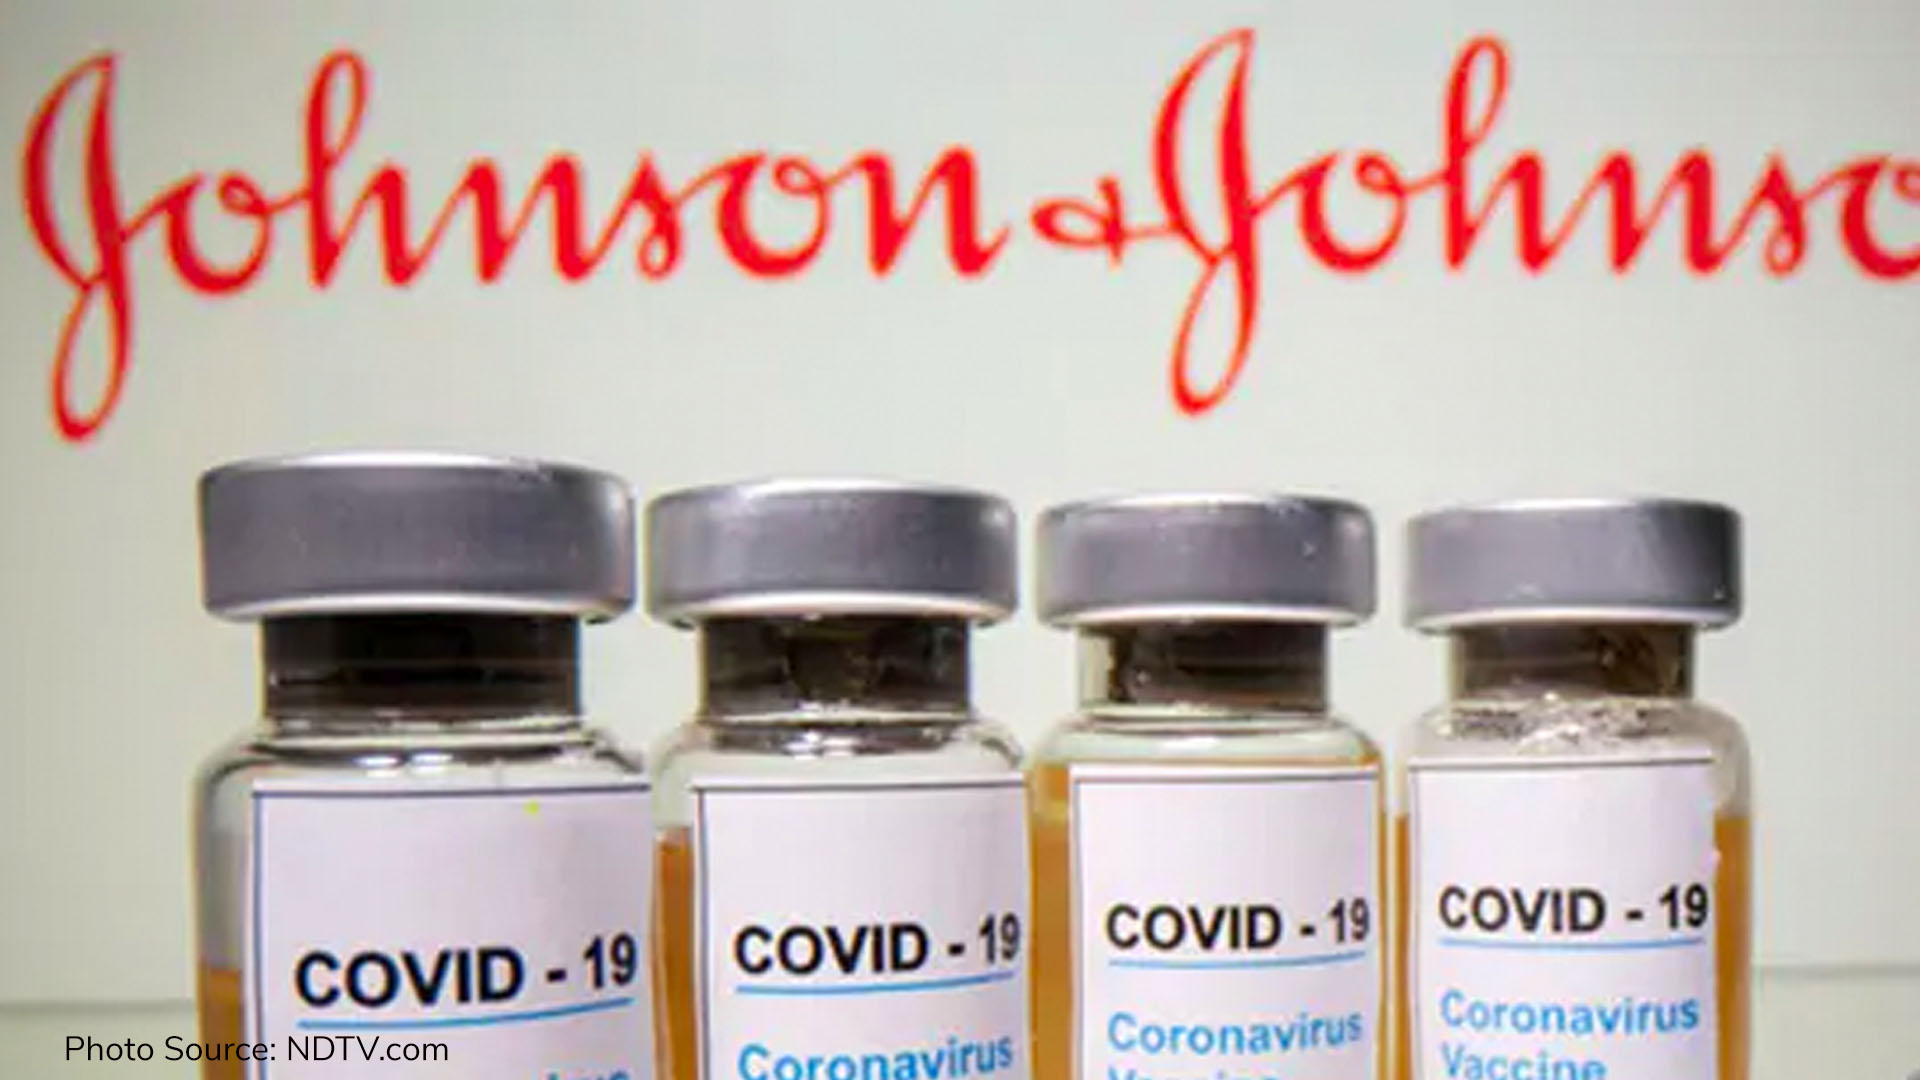 EU starts Johnson & Johnson vaccine distribution